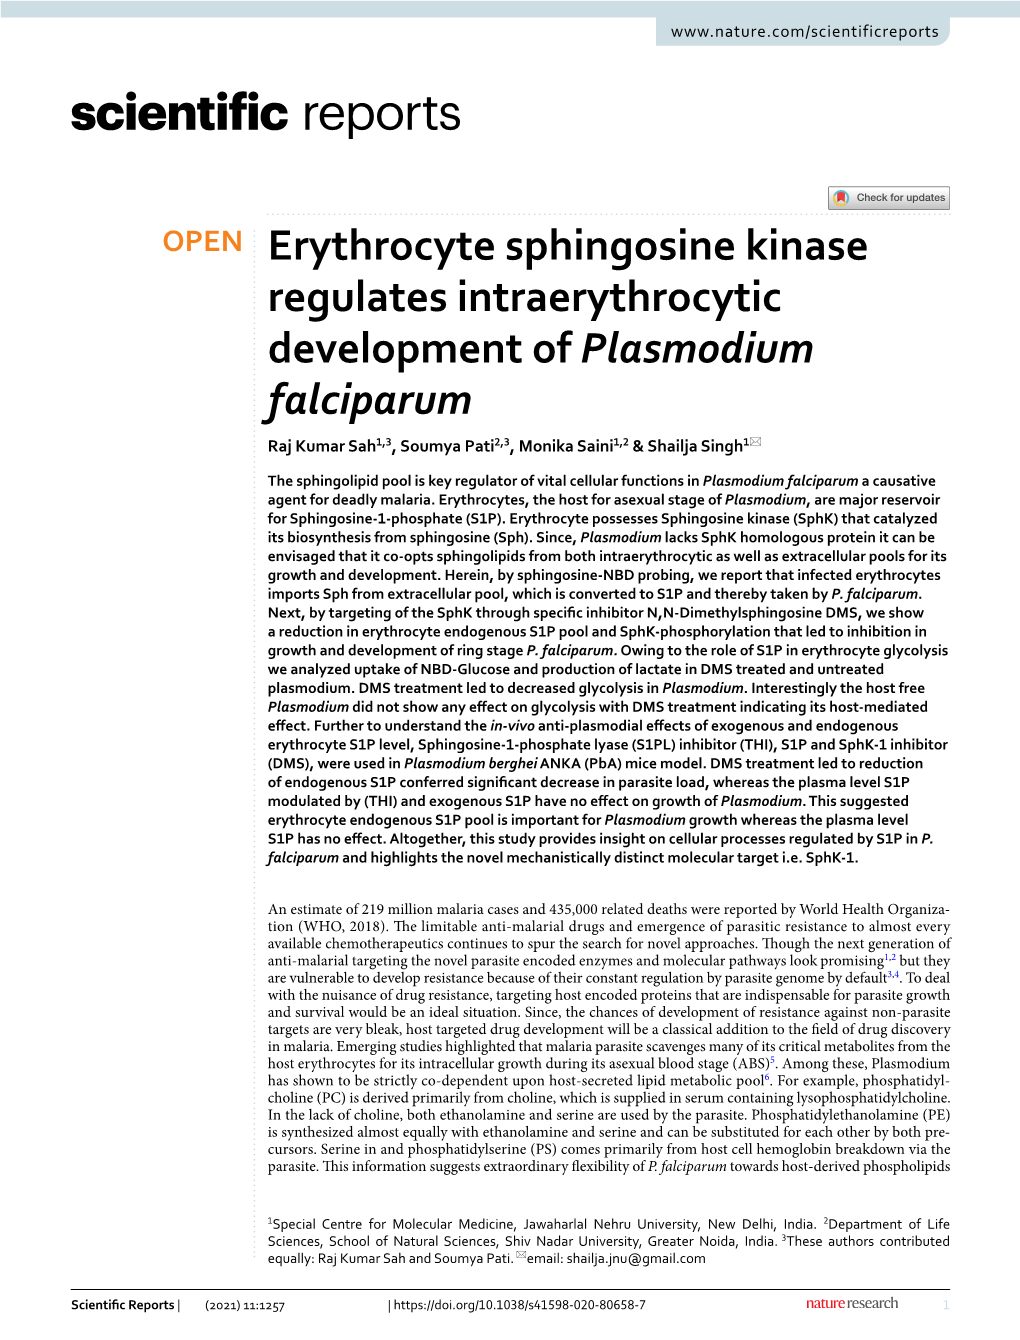 Erythrocyte Sphingosine Kinase Regulates Intraerythrocytic Development of Plasmodium Falciparum Raj Kumar Sah1,3, Soumya Pati2,3, Monika Saini1,2 & Shailja Singh1*